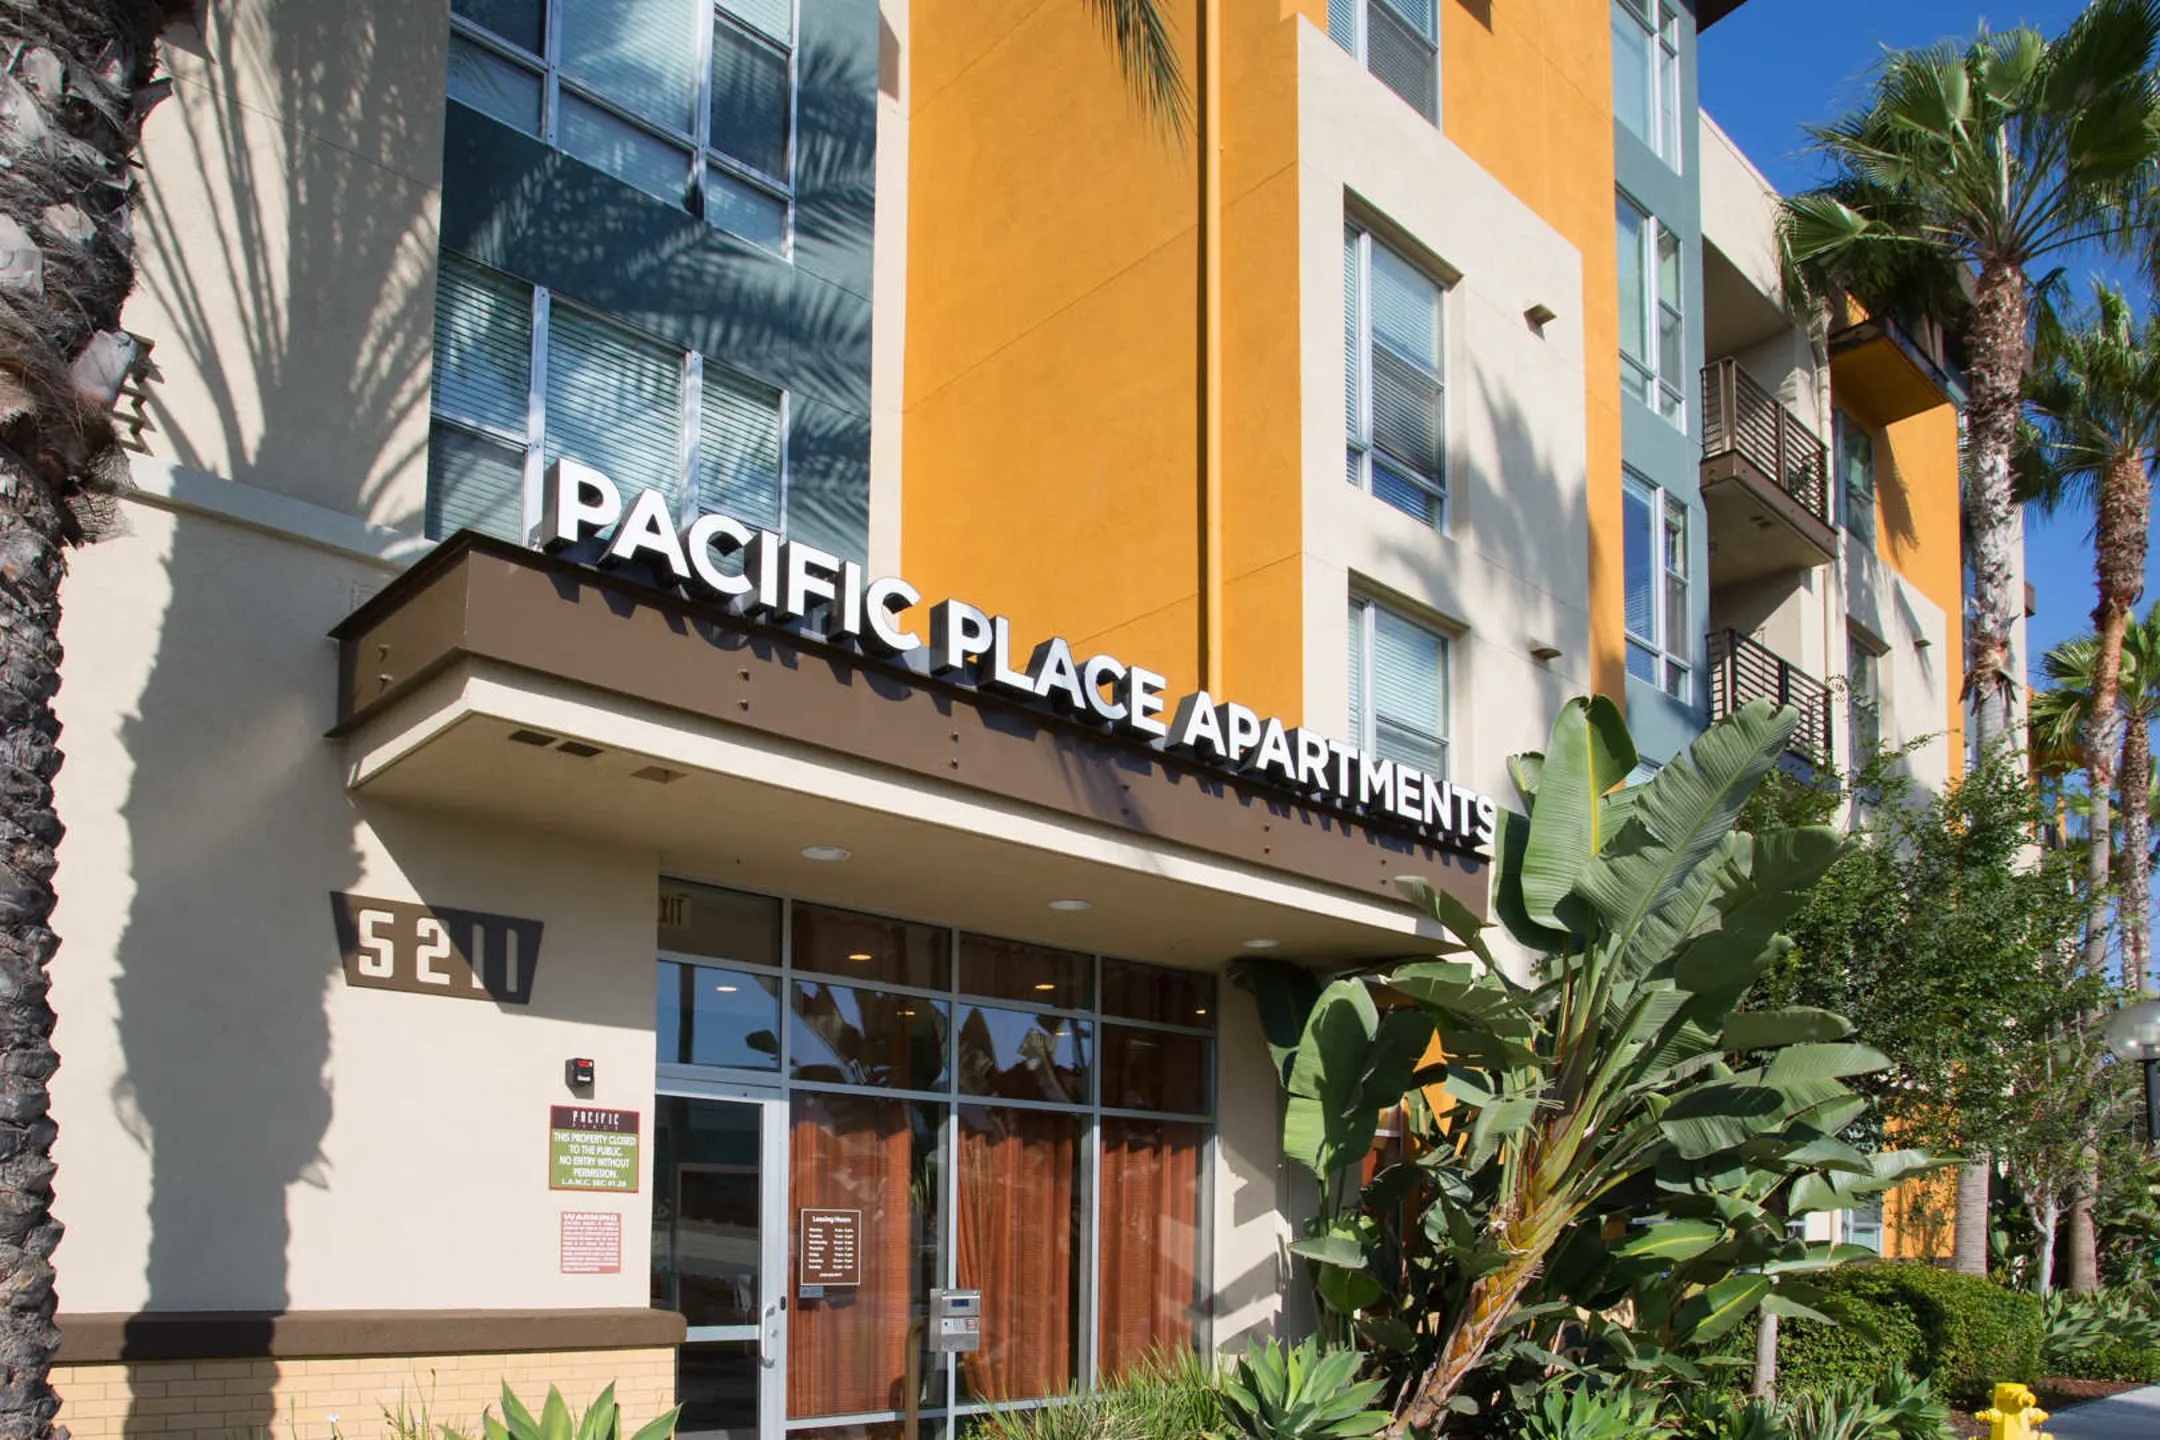 Building - Pacific Place - Los Angeles, CA